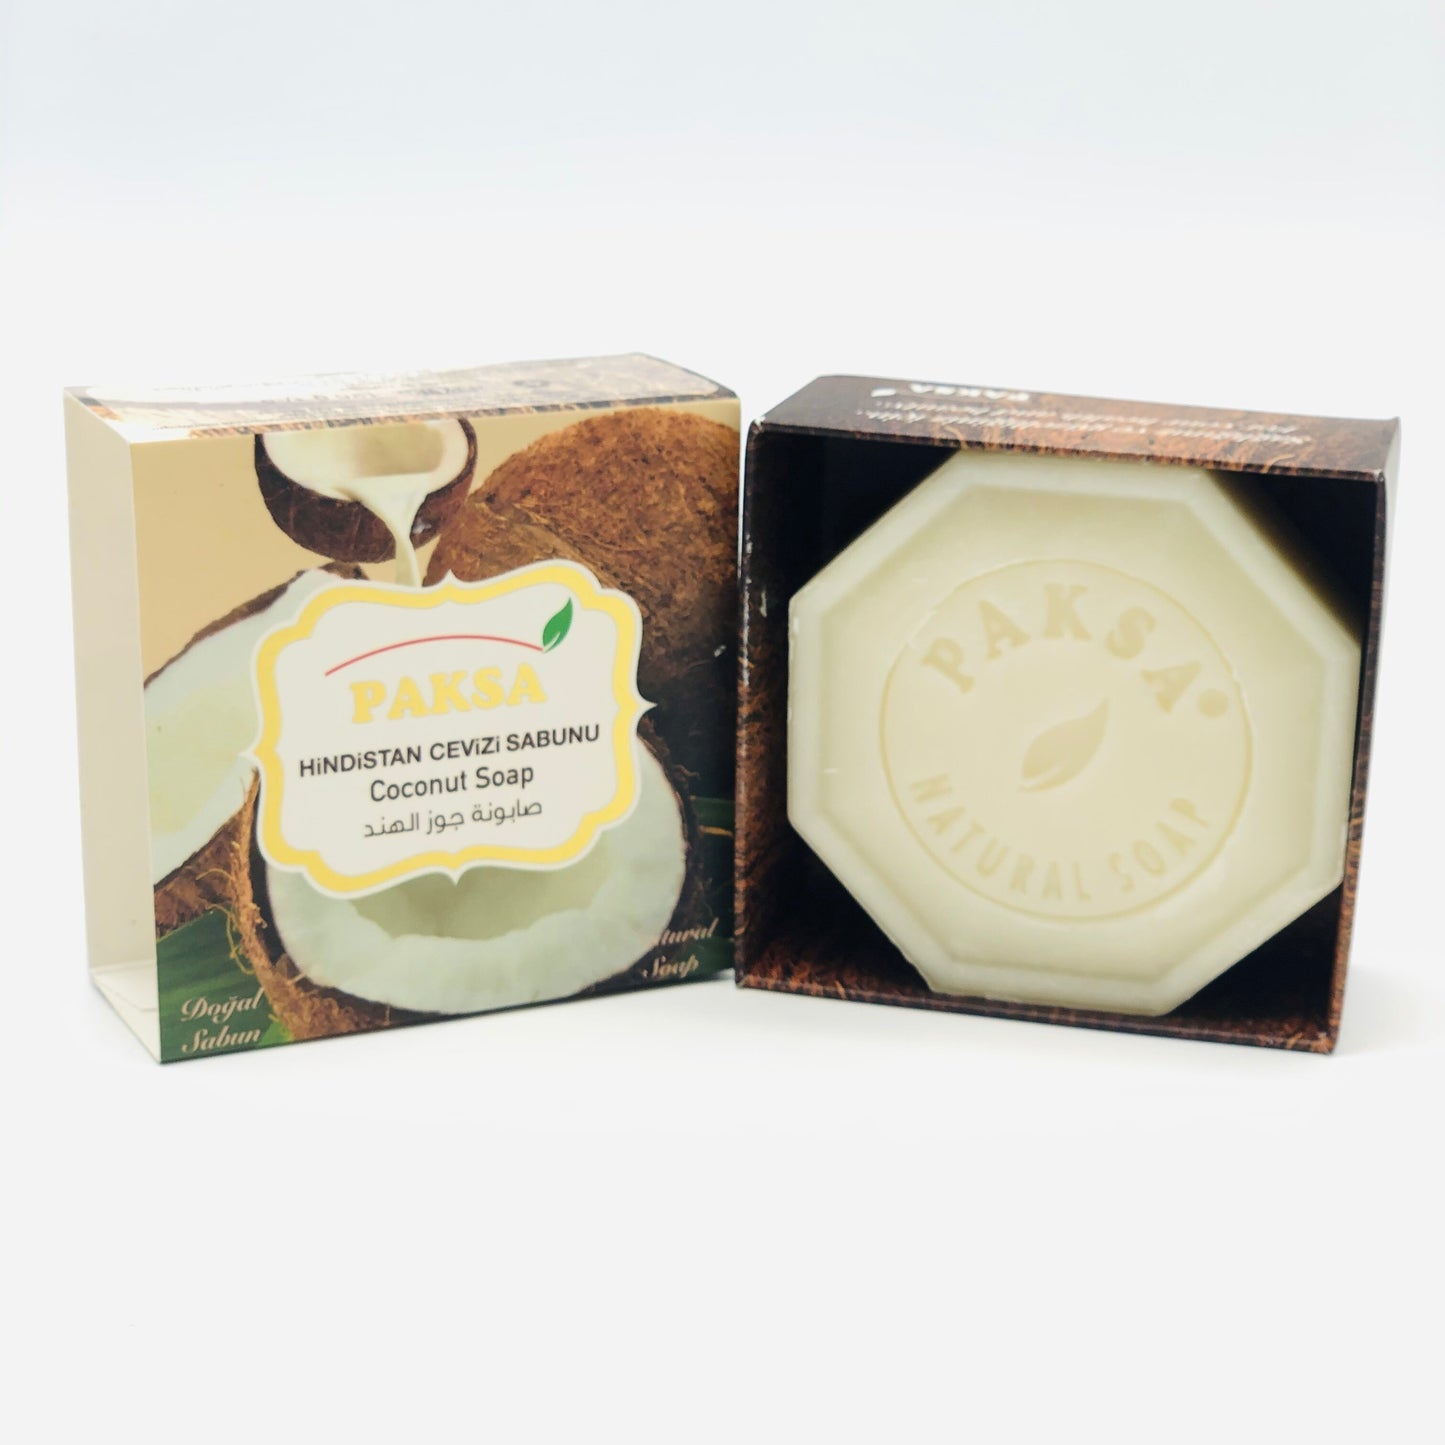 Paksa, Organic Coconut Soap